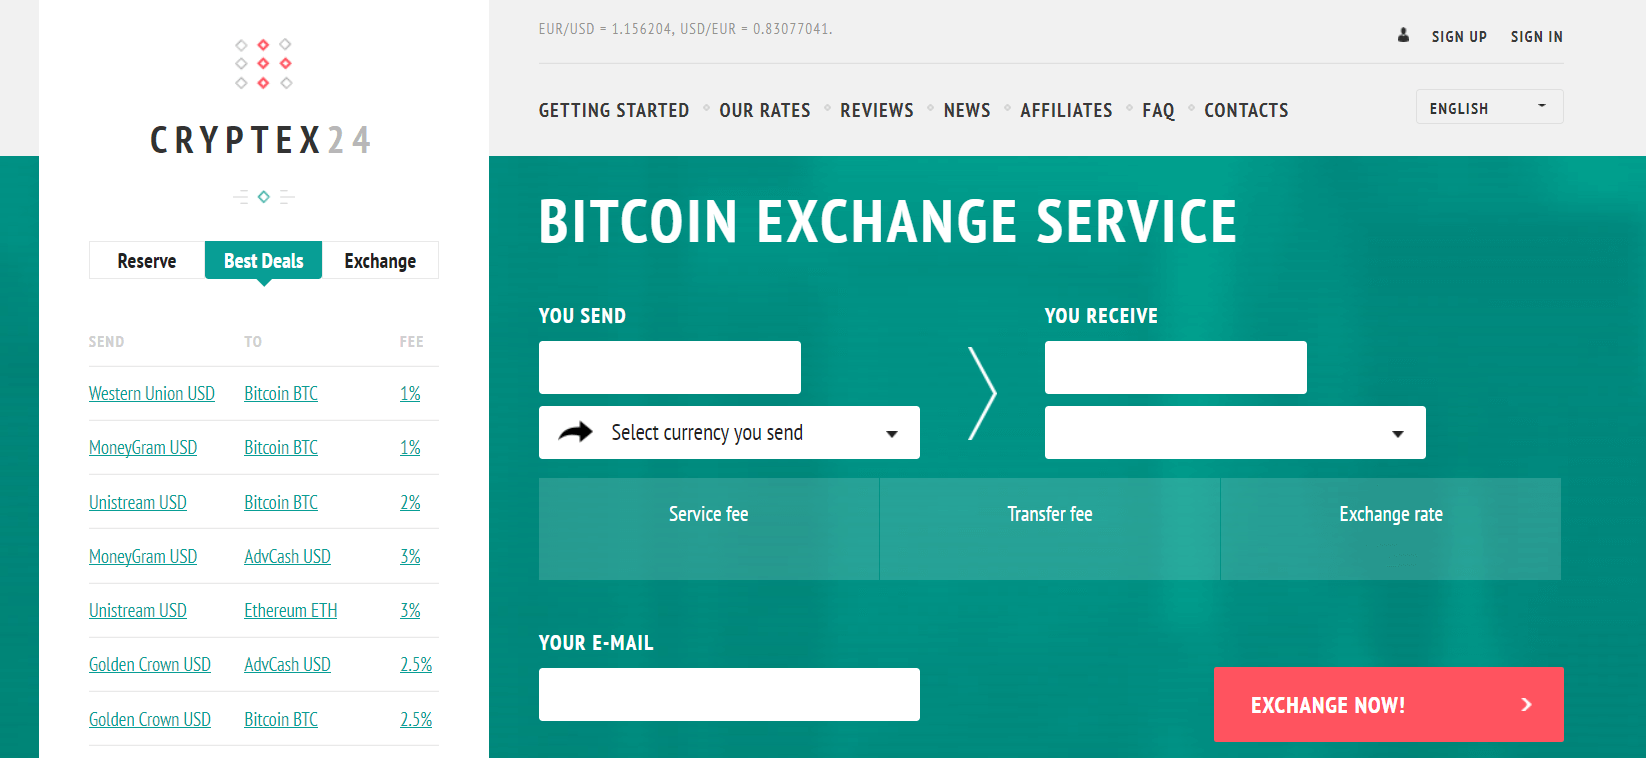 Best Bitcoin Singapore Exchanges